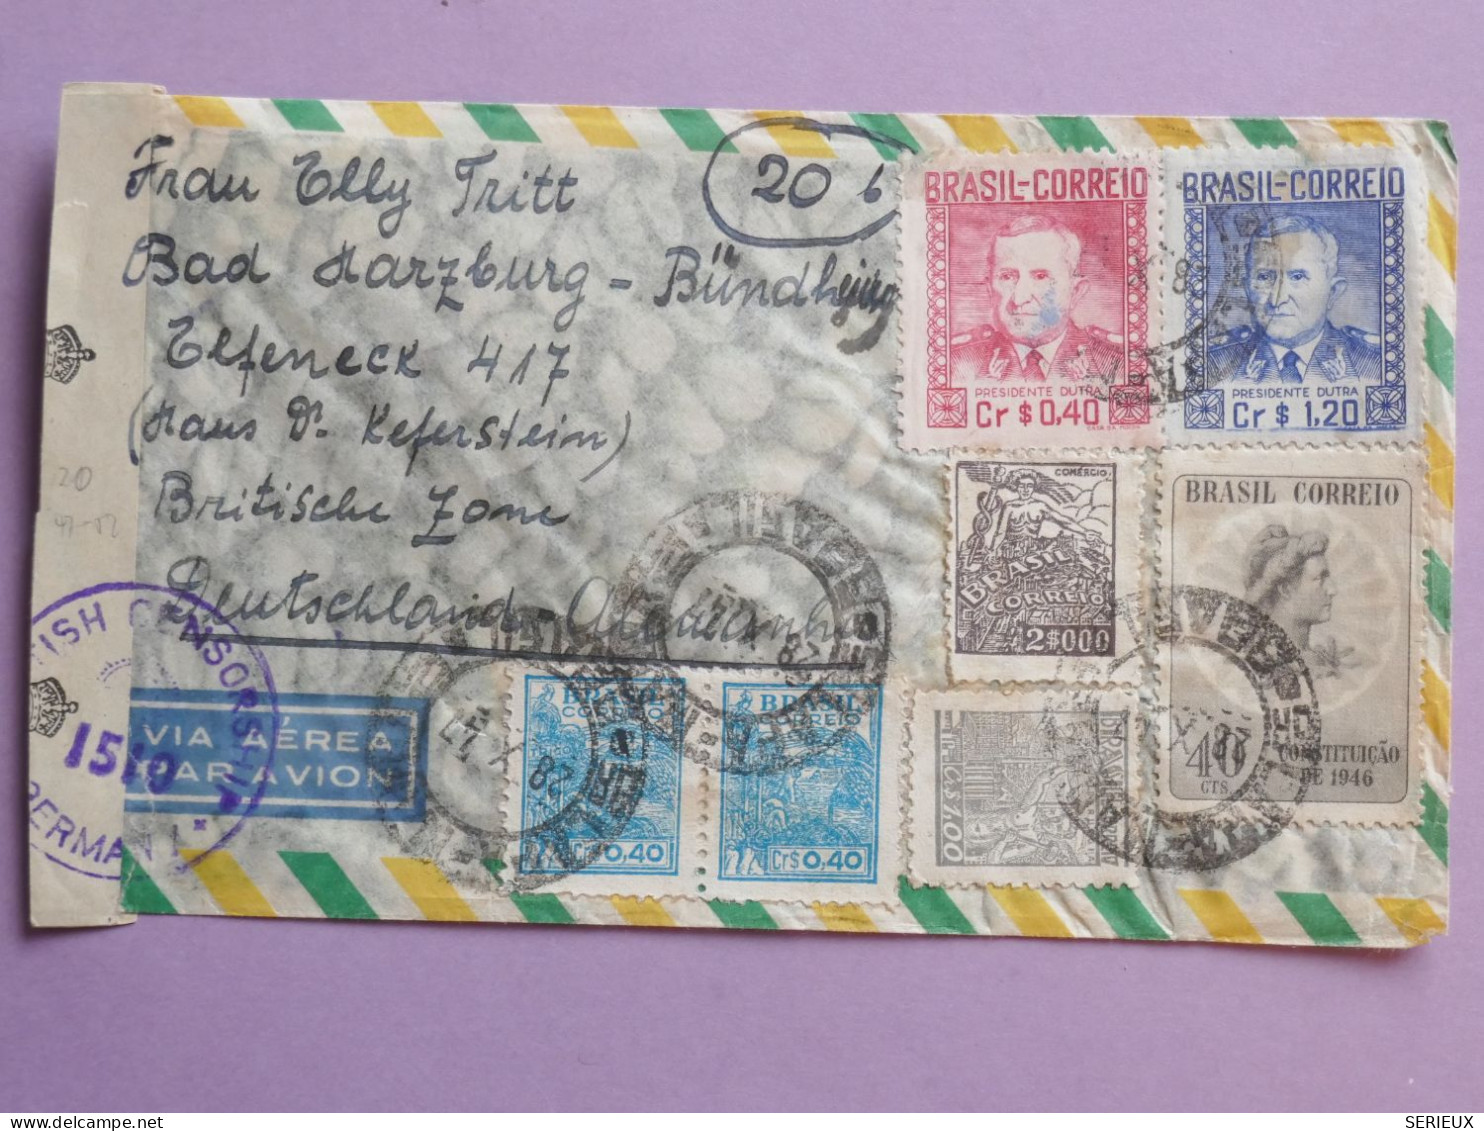 DL 19 BRAZIL  BELLE LETTRE   1947 RIO A  ALLEMANIA   +AFF. INTERESSANT+ - Covers & Documents